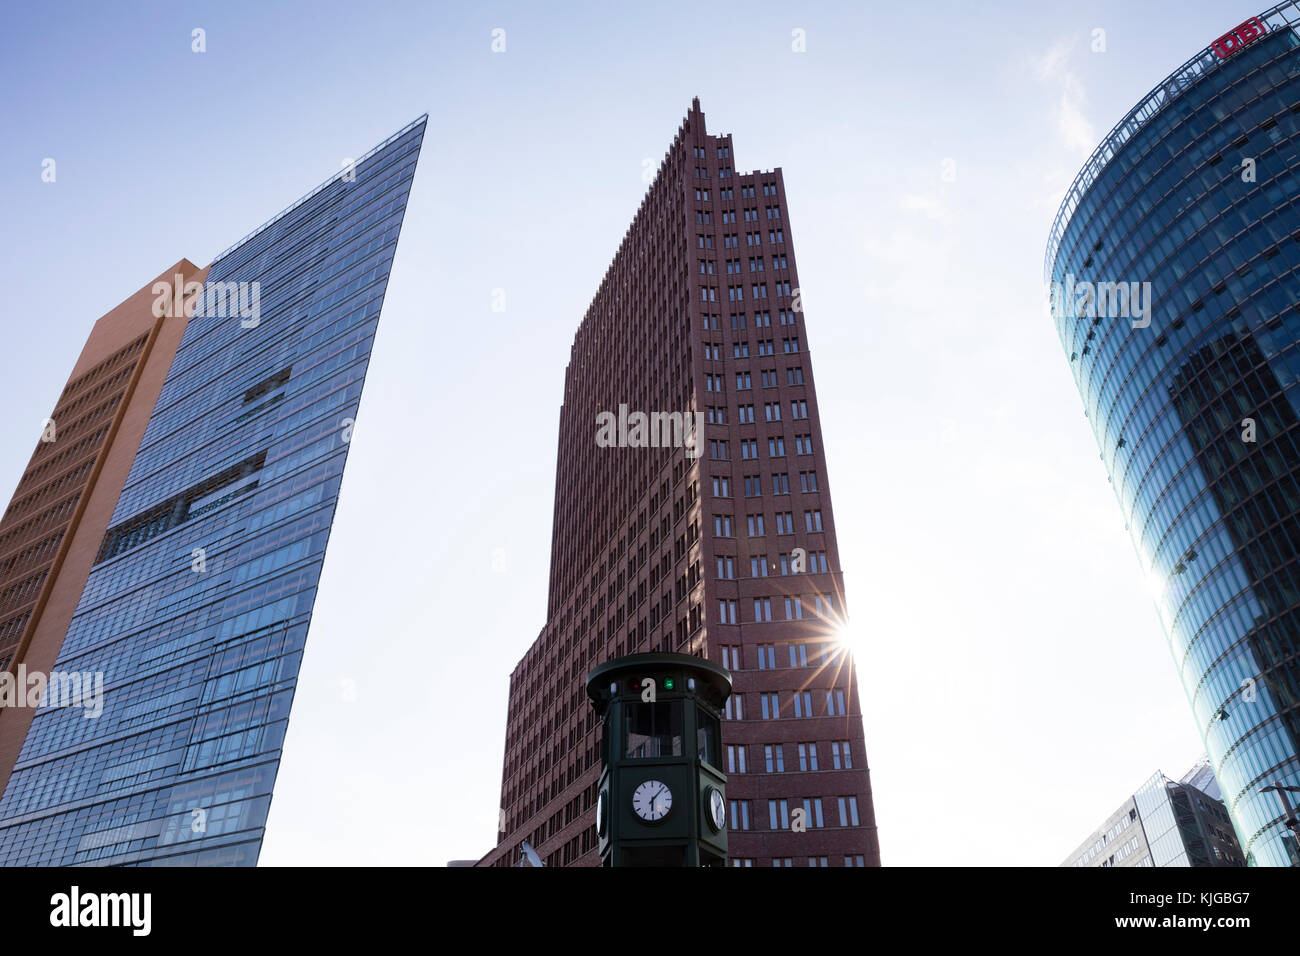 Germany, Berlin, Potsdamer Platz, Forum Tower, Kollhoff-Tower and Bahntower Stock Photo